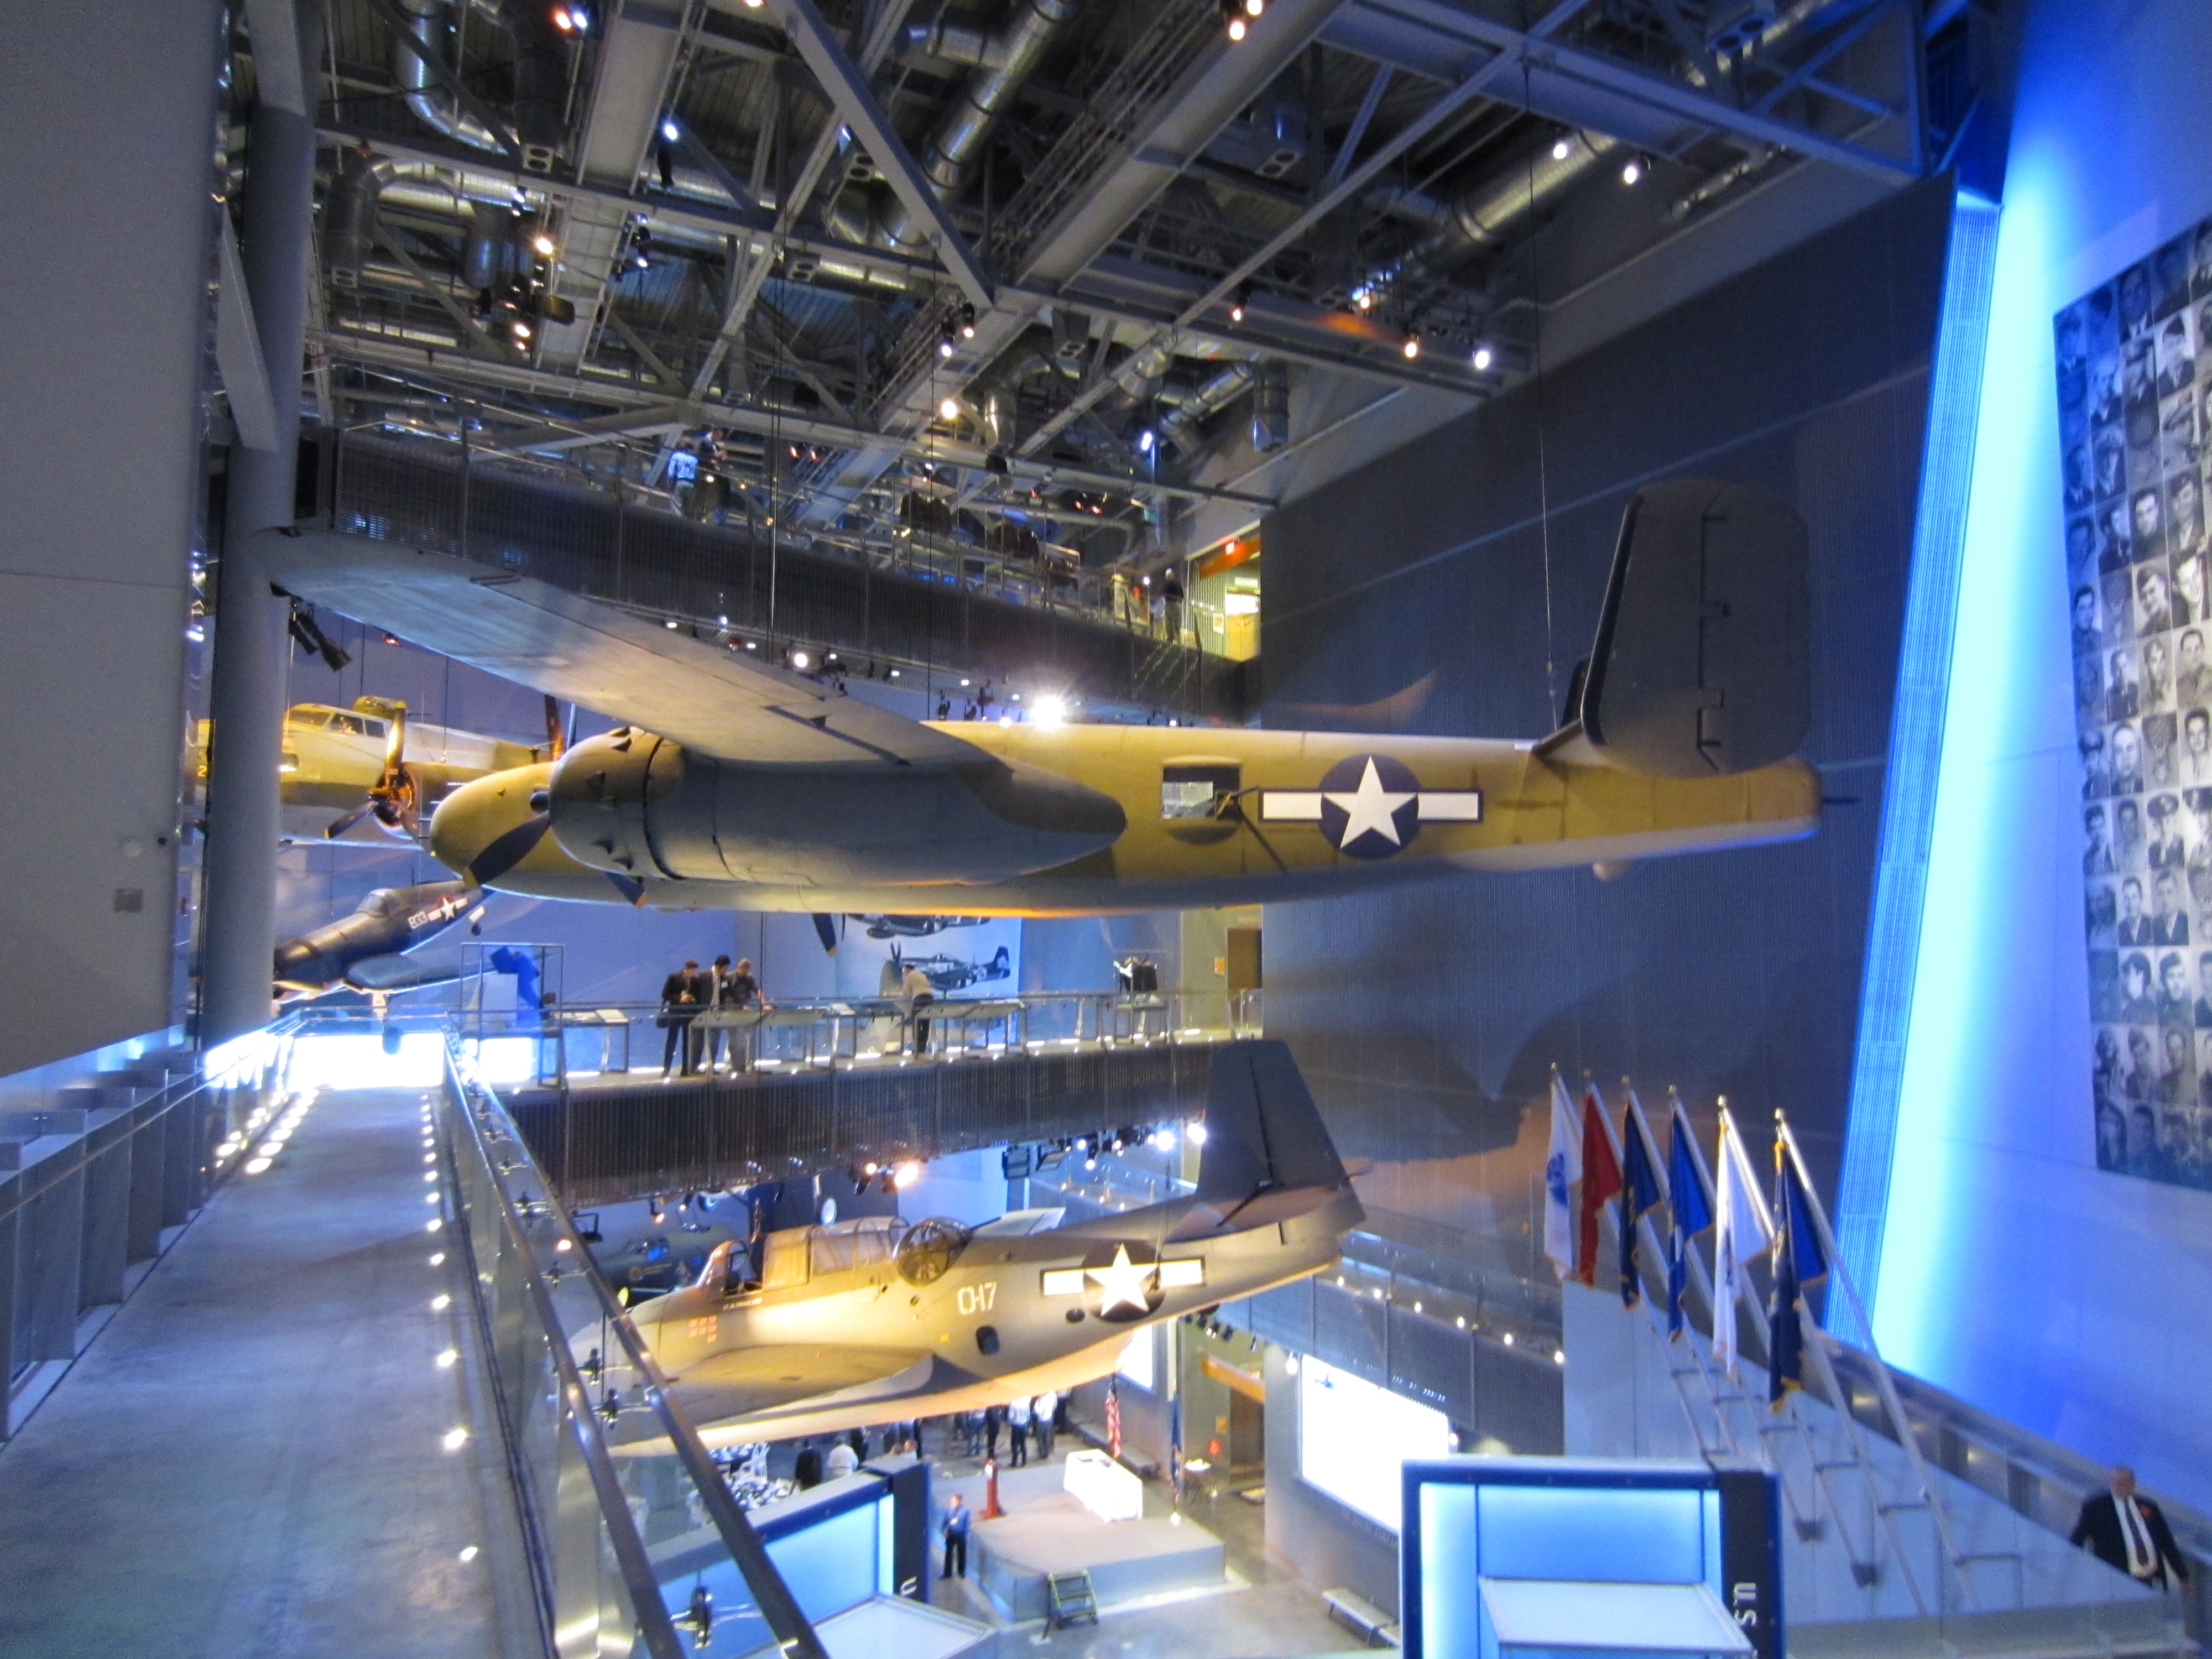 Dinner in the National World War II Museum Hangar – Not Your Average Engineer